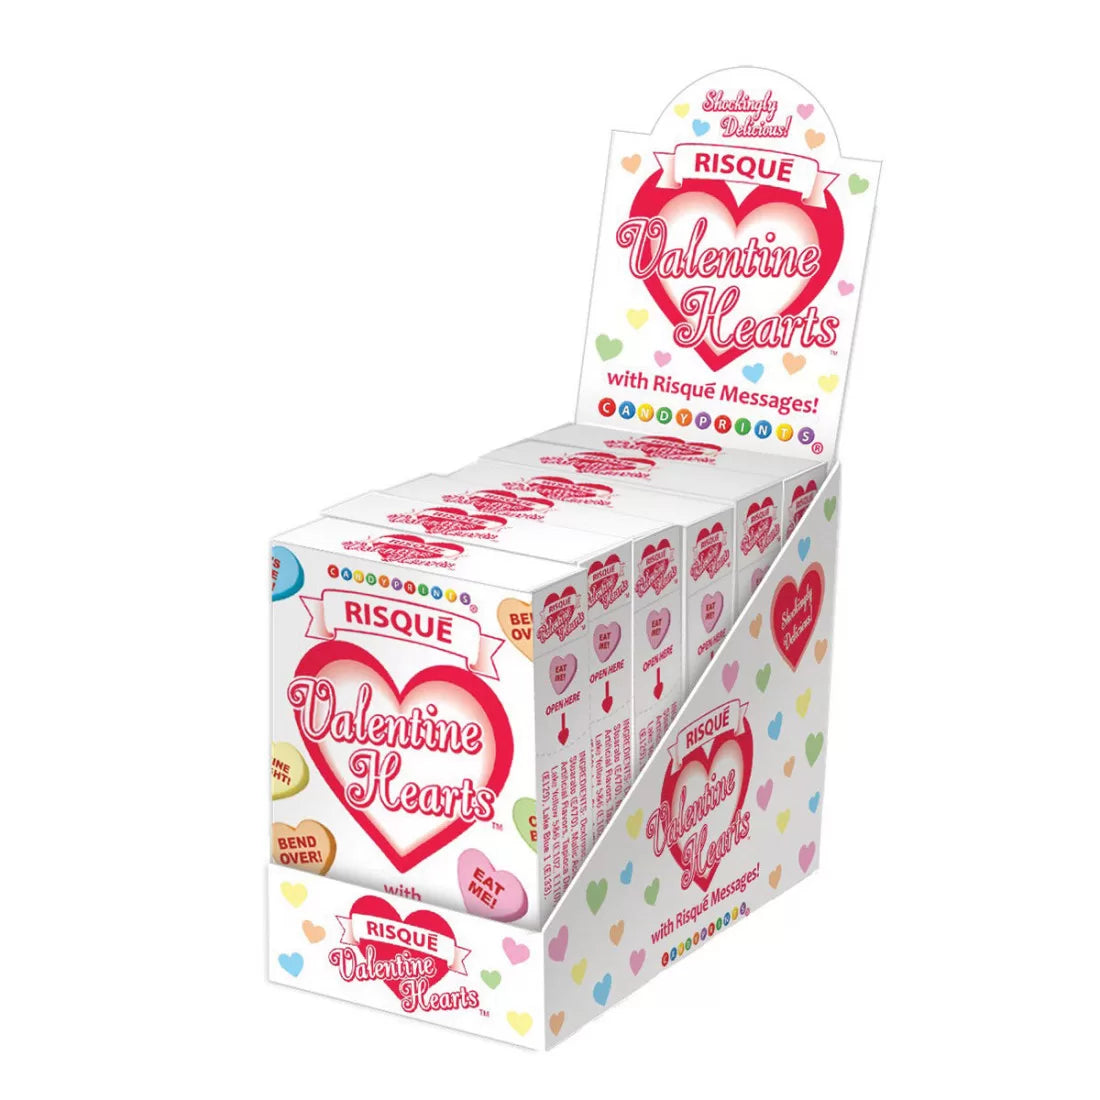 Risque Valentine Candy Hearts at Belle Lacet Lingerie